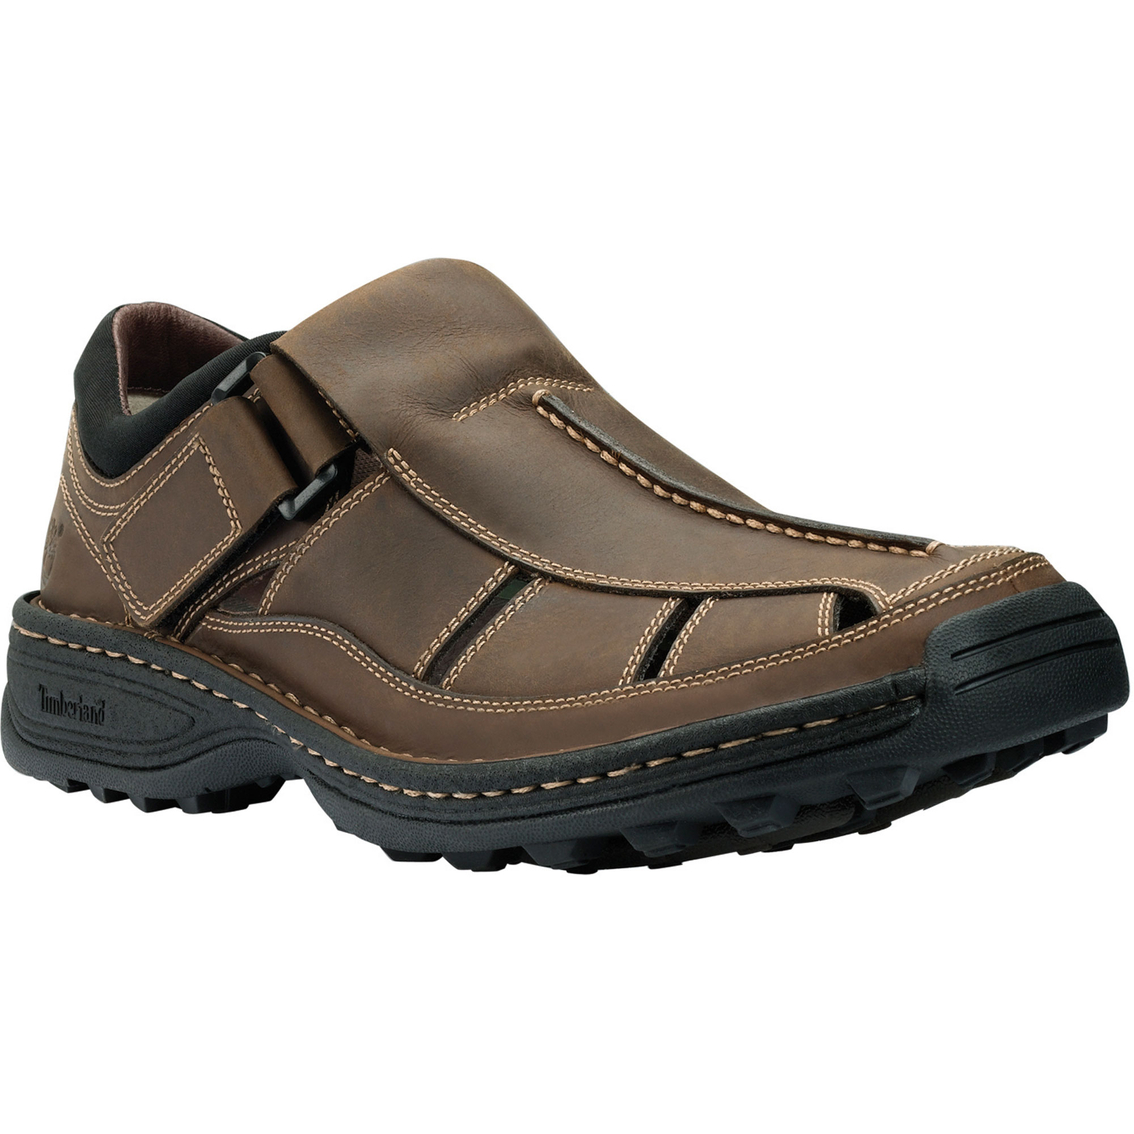 Timberland Men's Altamont Fisherman Sandals | Sandals & Flip Flops ...